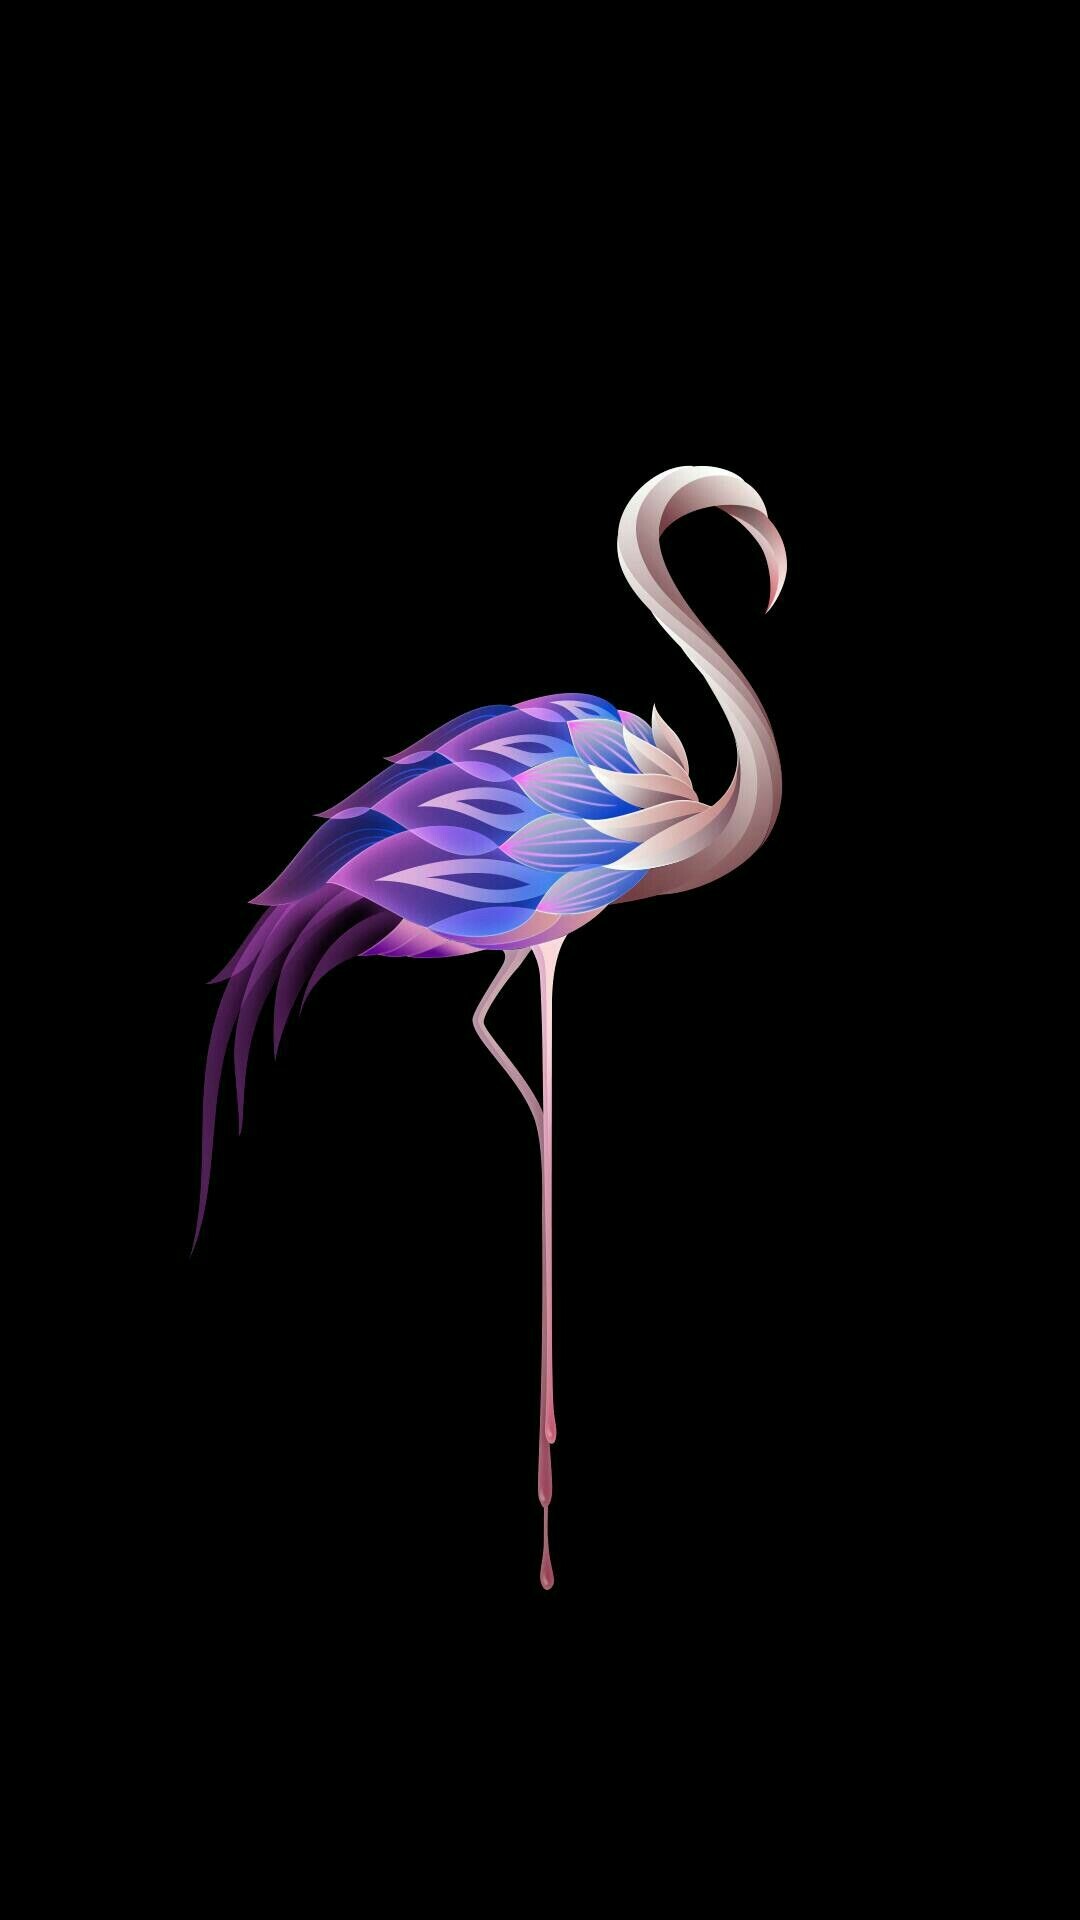 Flamingo: Bird, Belong to the Phoenicopteridae family. 1080x1920 Full HD Wallpaper.